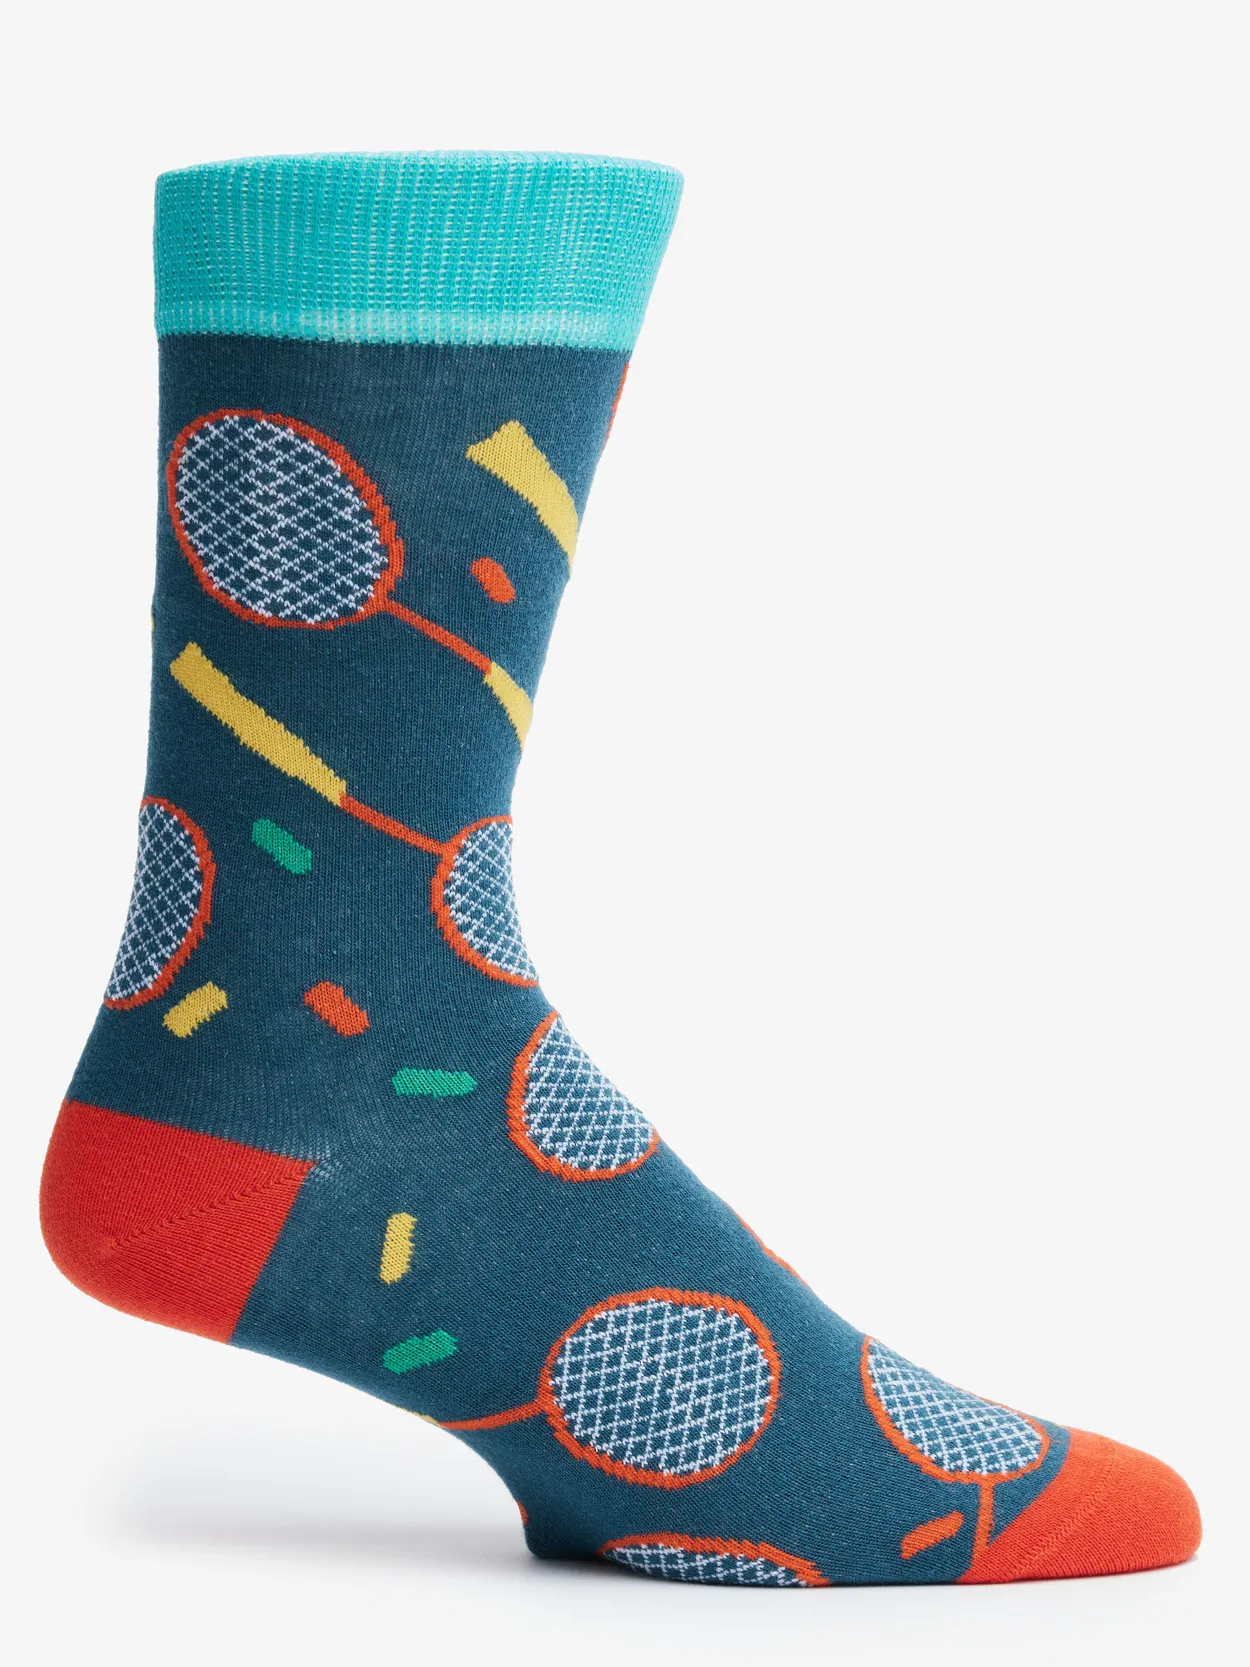 Socks San Blas Multicolored